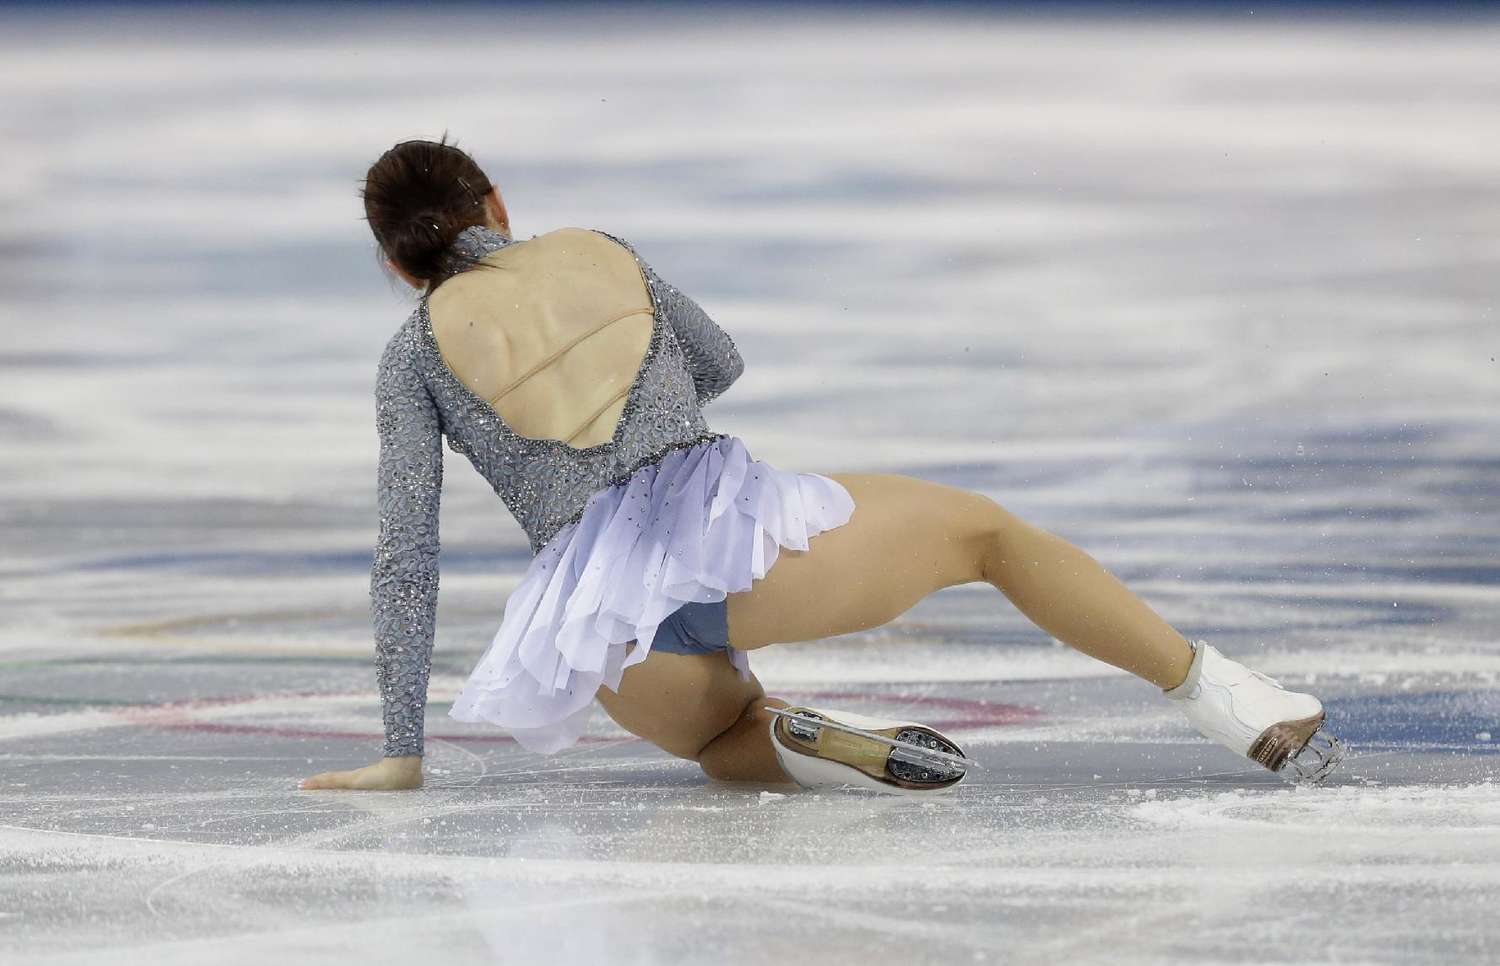 Ice skating sexy.